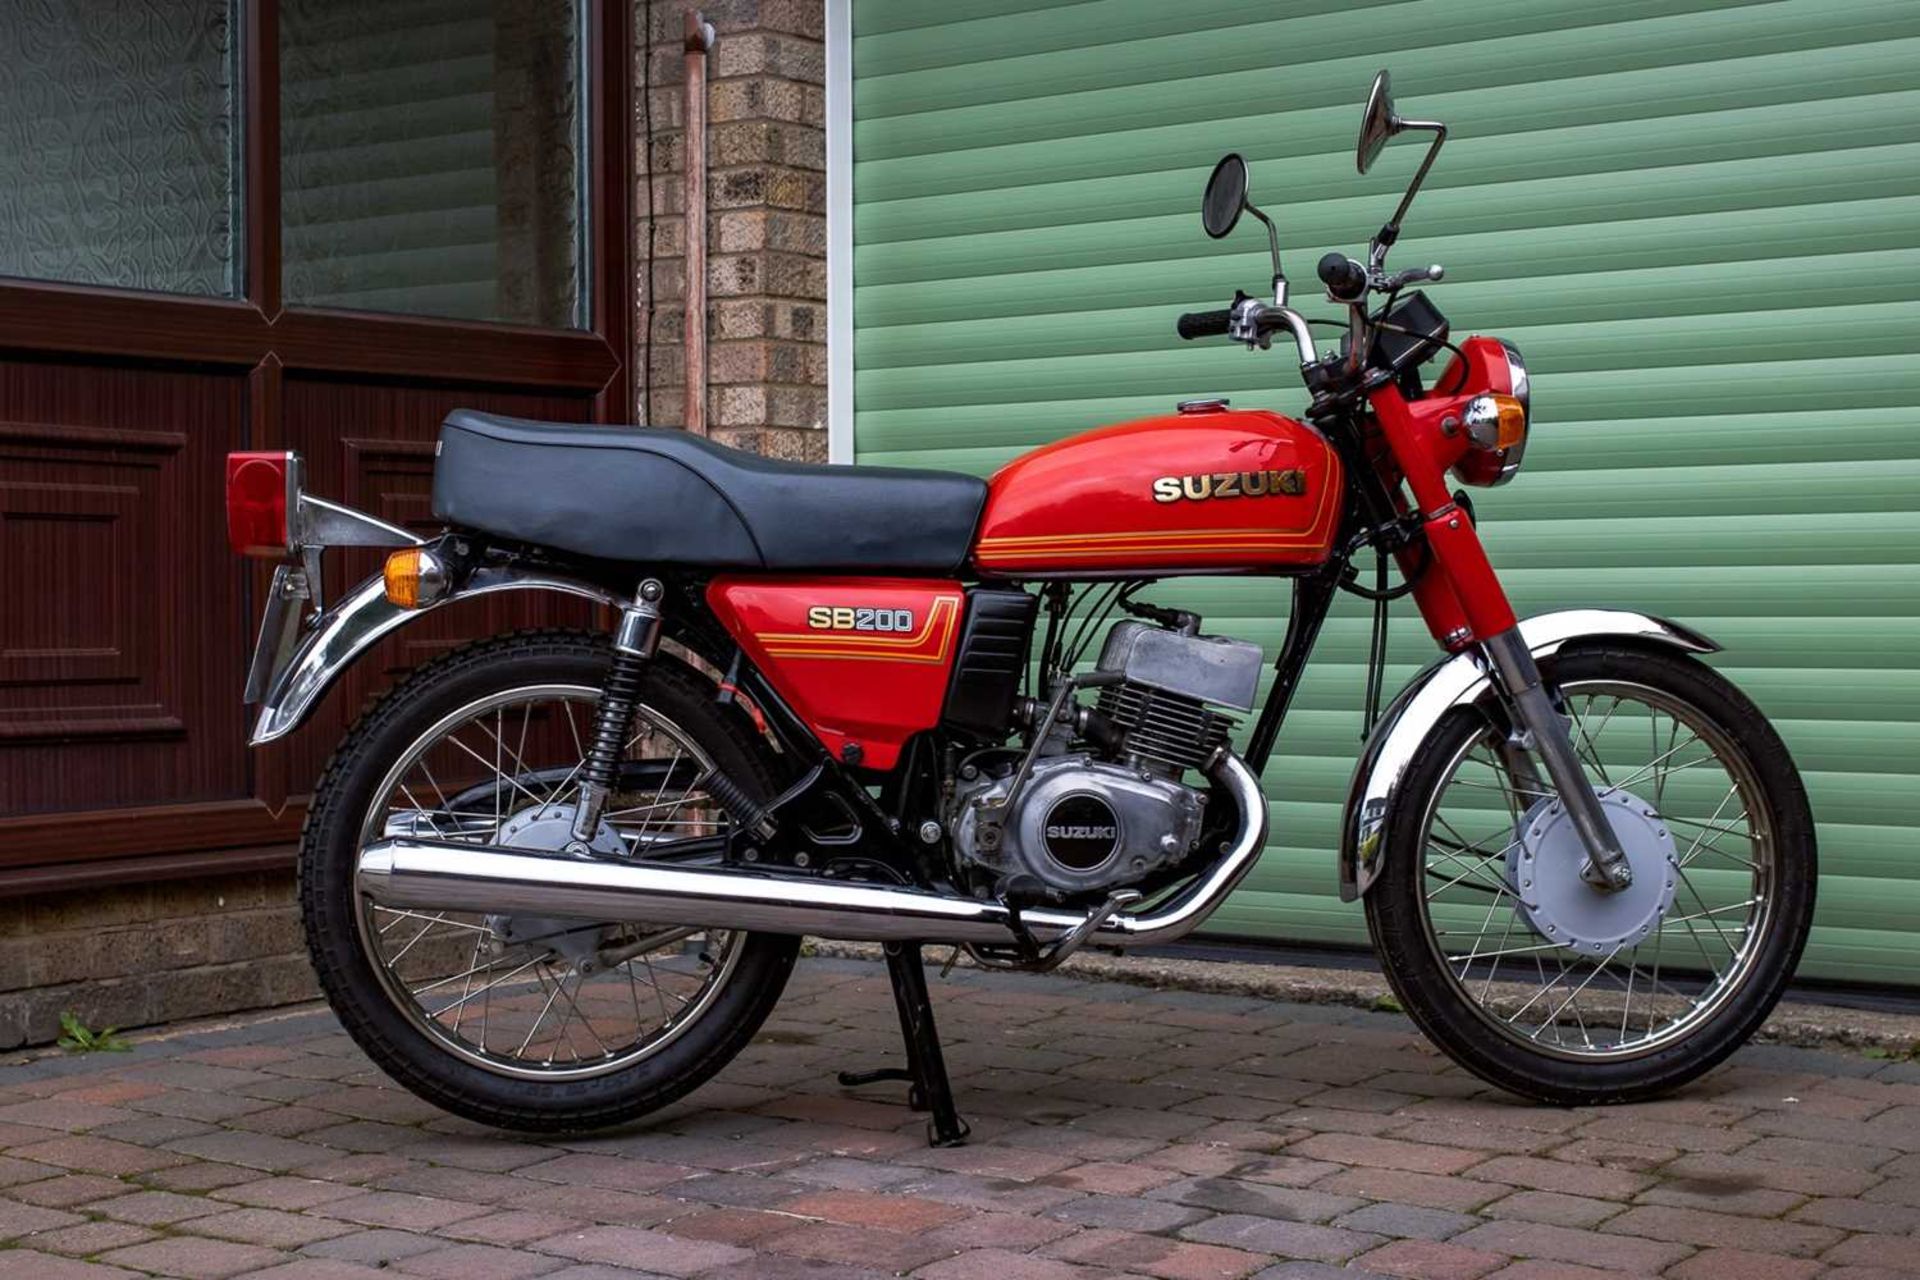 1979 Suzuki SB200 - Image 9 of 51